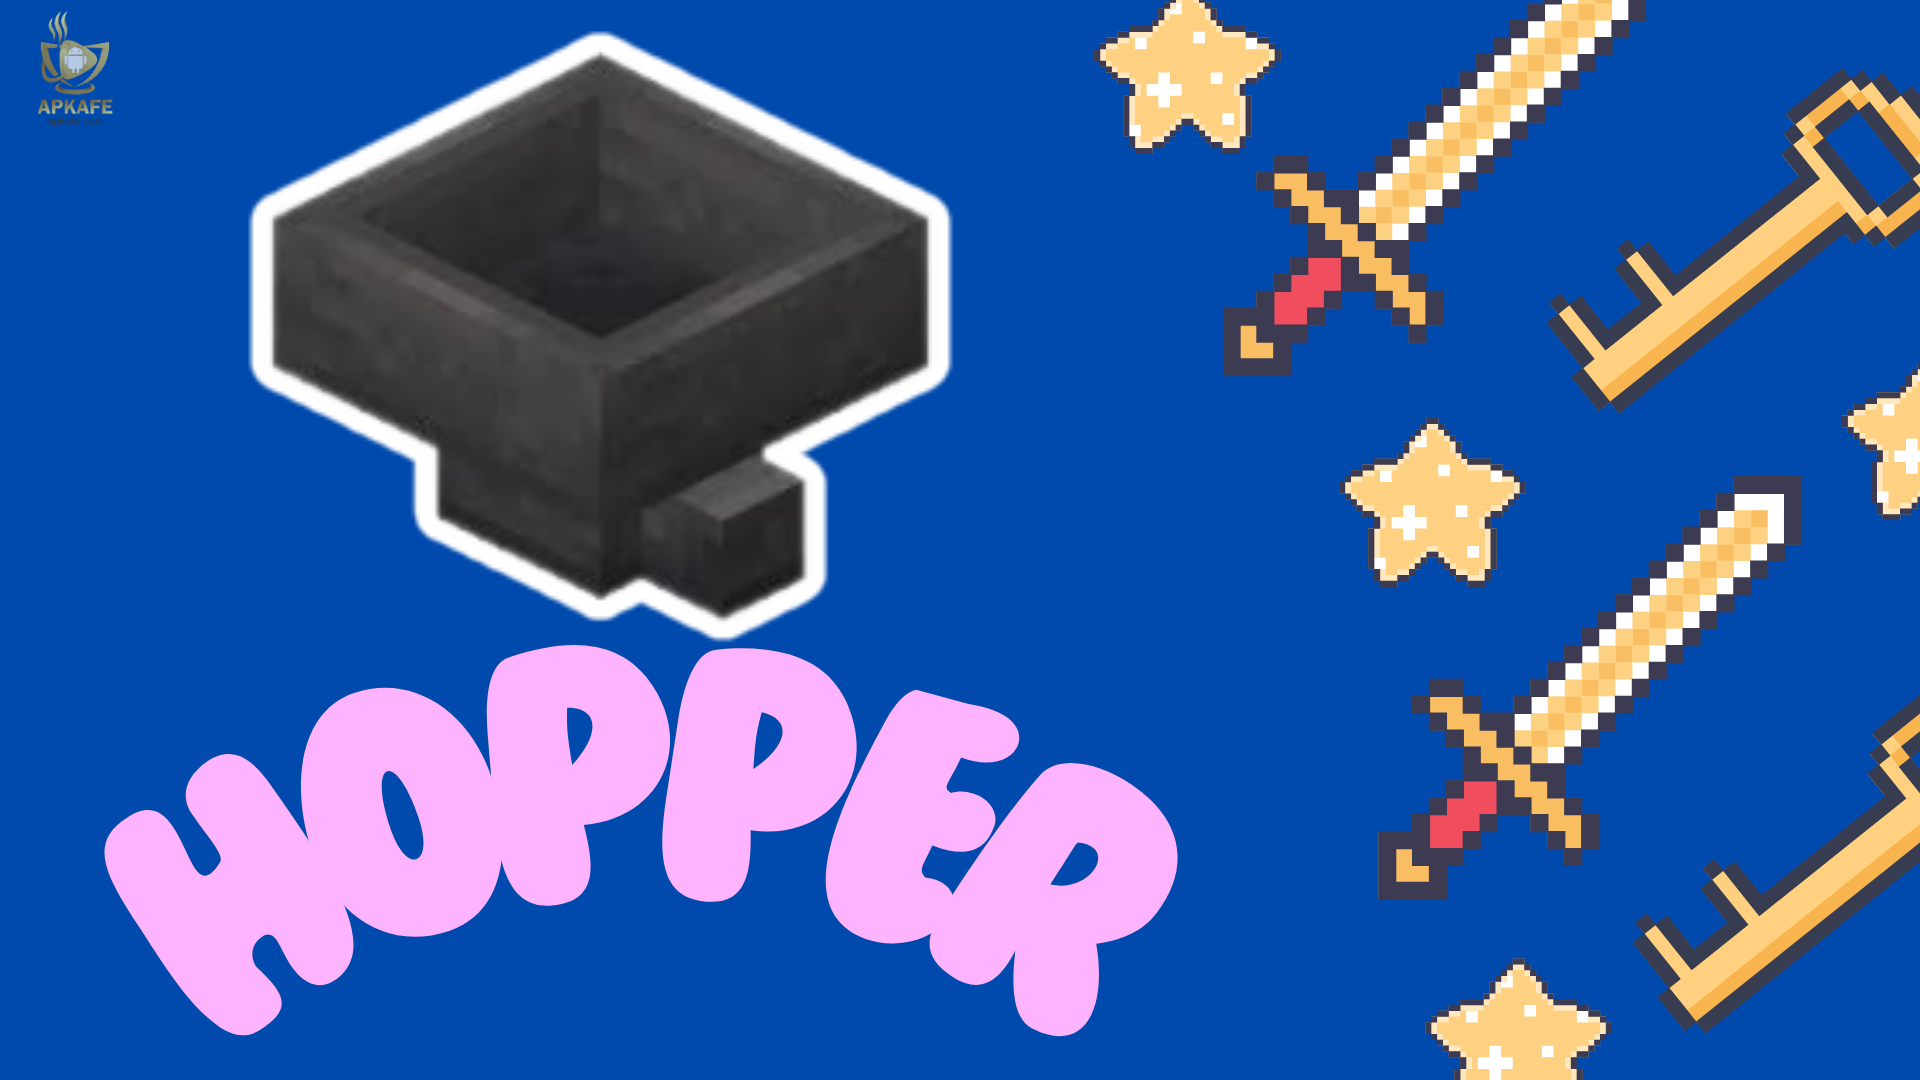 hopper - apkafe